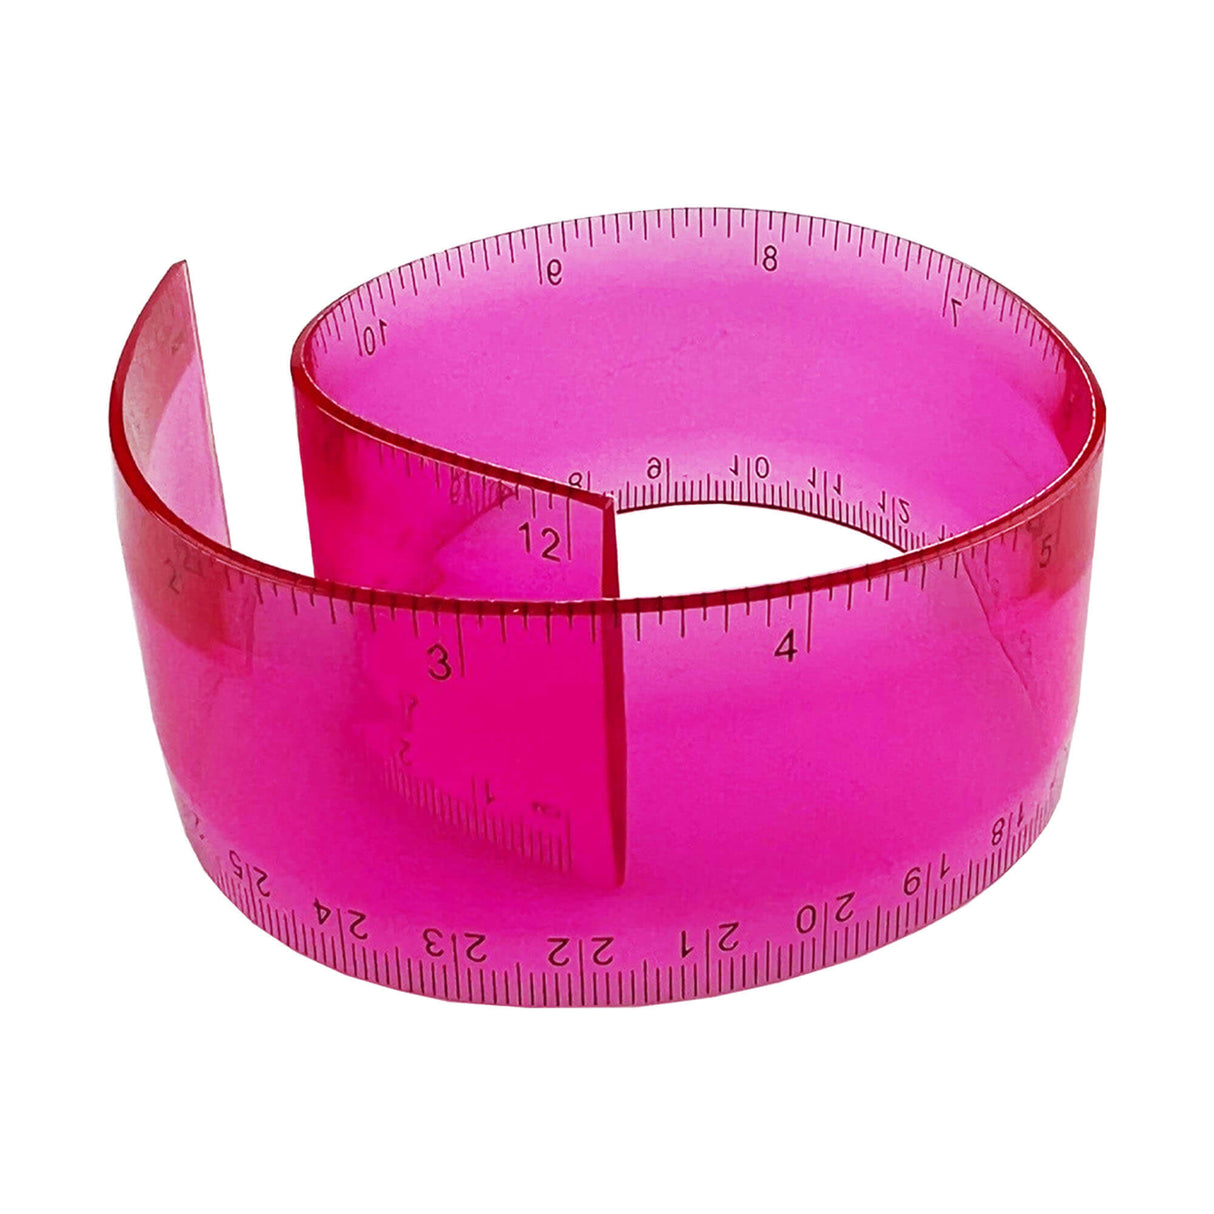 PVC Soft Plastic Ruler - Printed